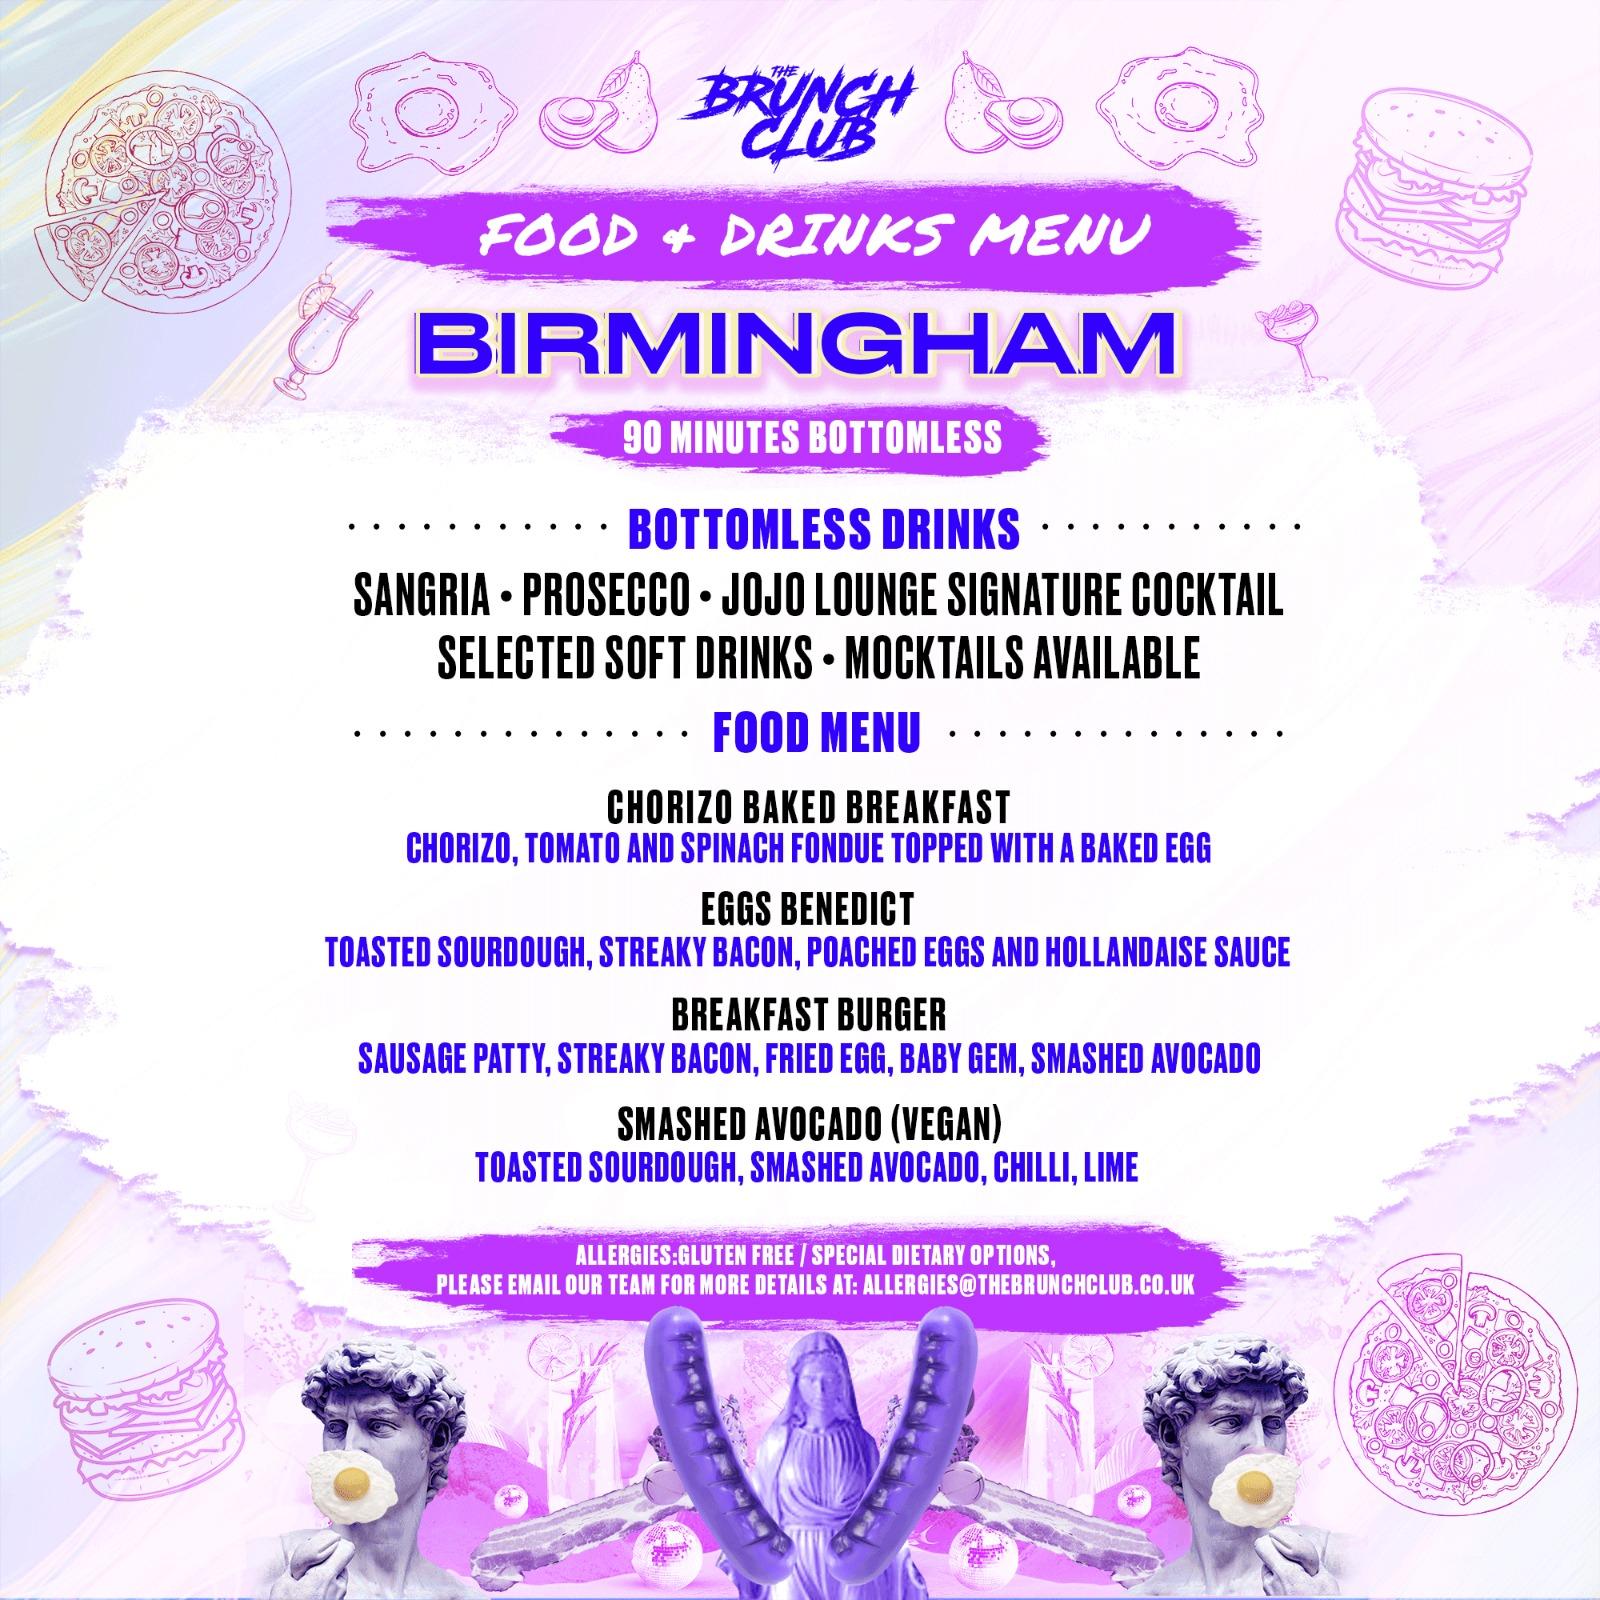 The Xmas Drag Extravaganza Bottomless Brunch - Birmingham